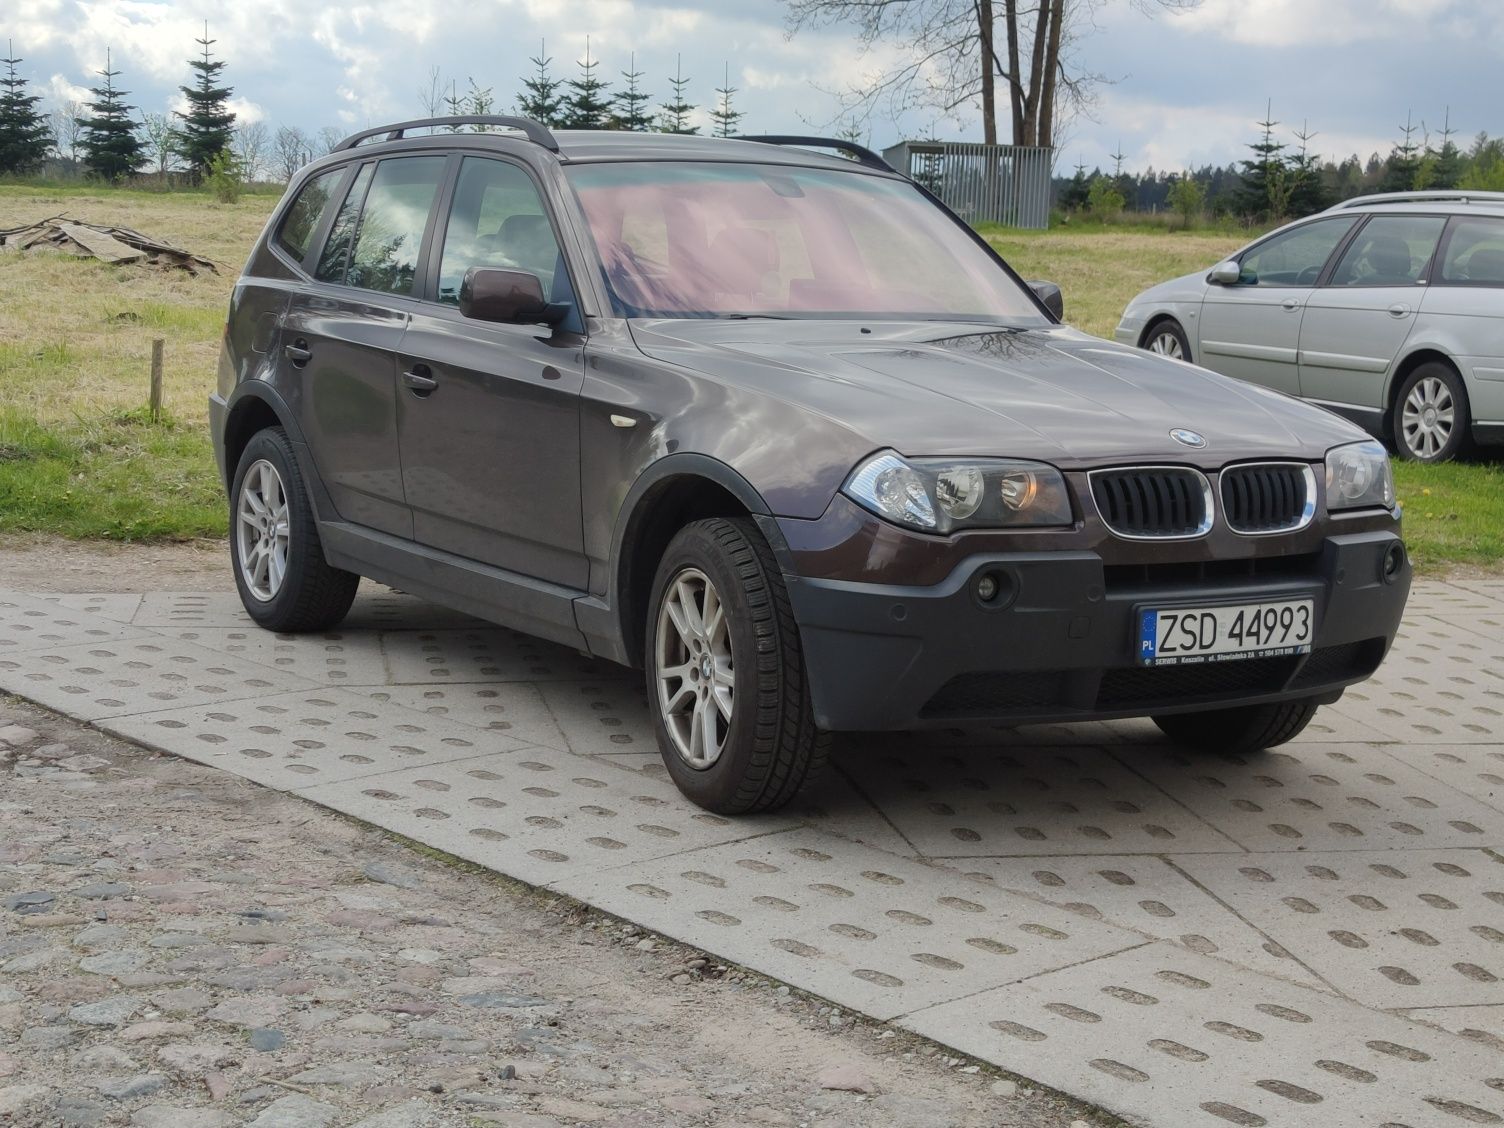 BMW X3 Moccabraun e83 2.0d 150km 4x4 Android Spotify Klima suv